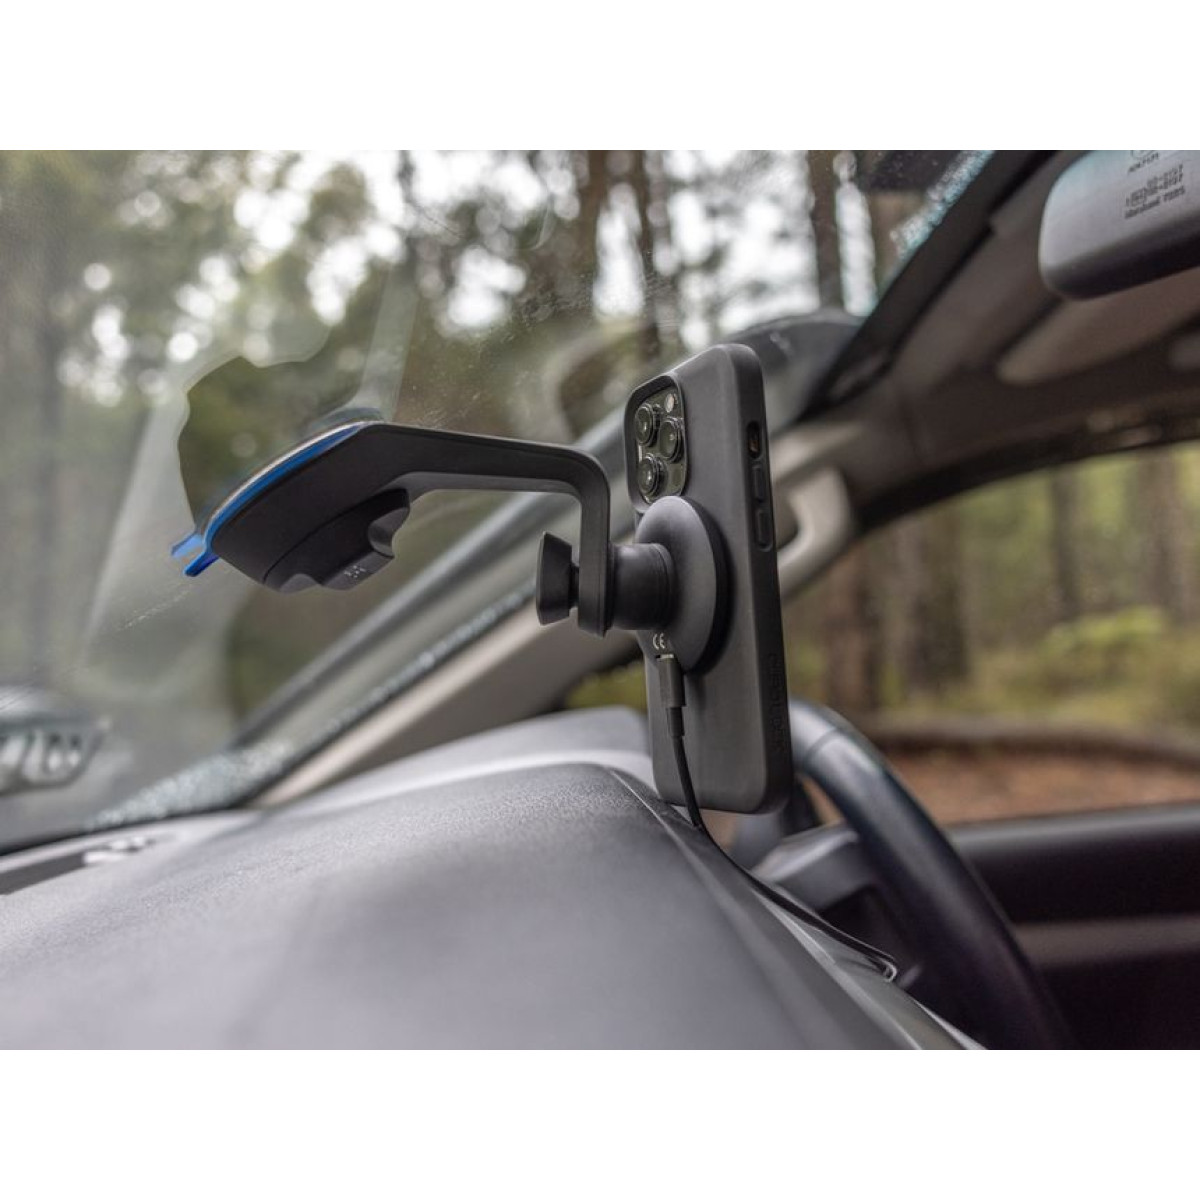 Car/Desk - Wireless Charging Head